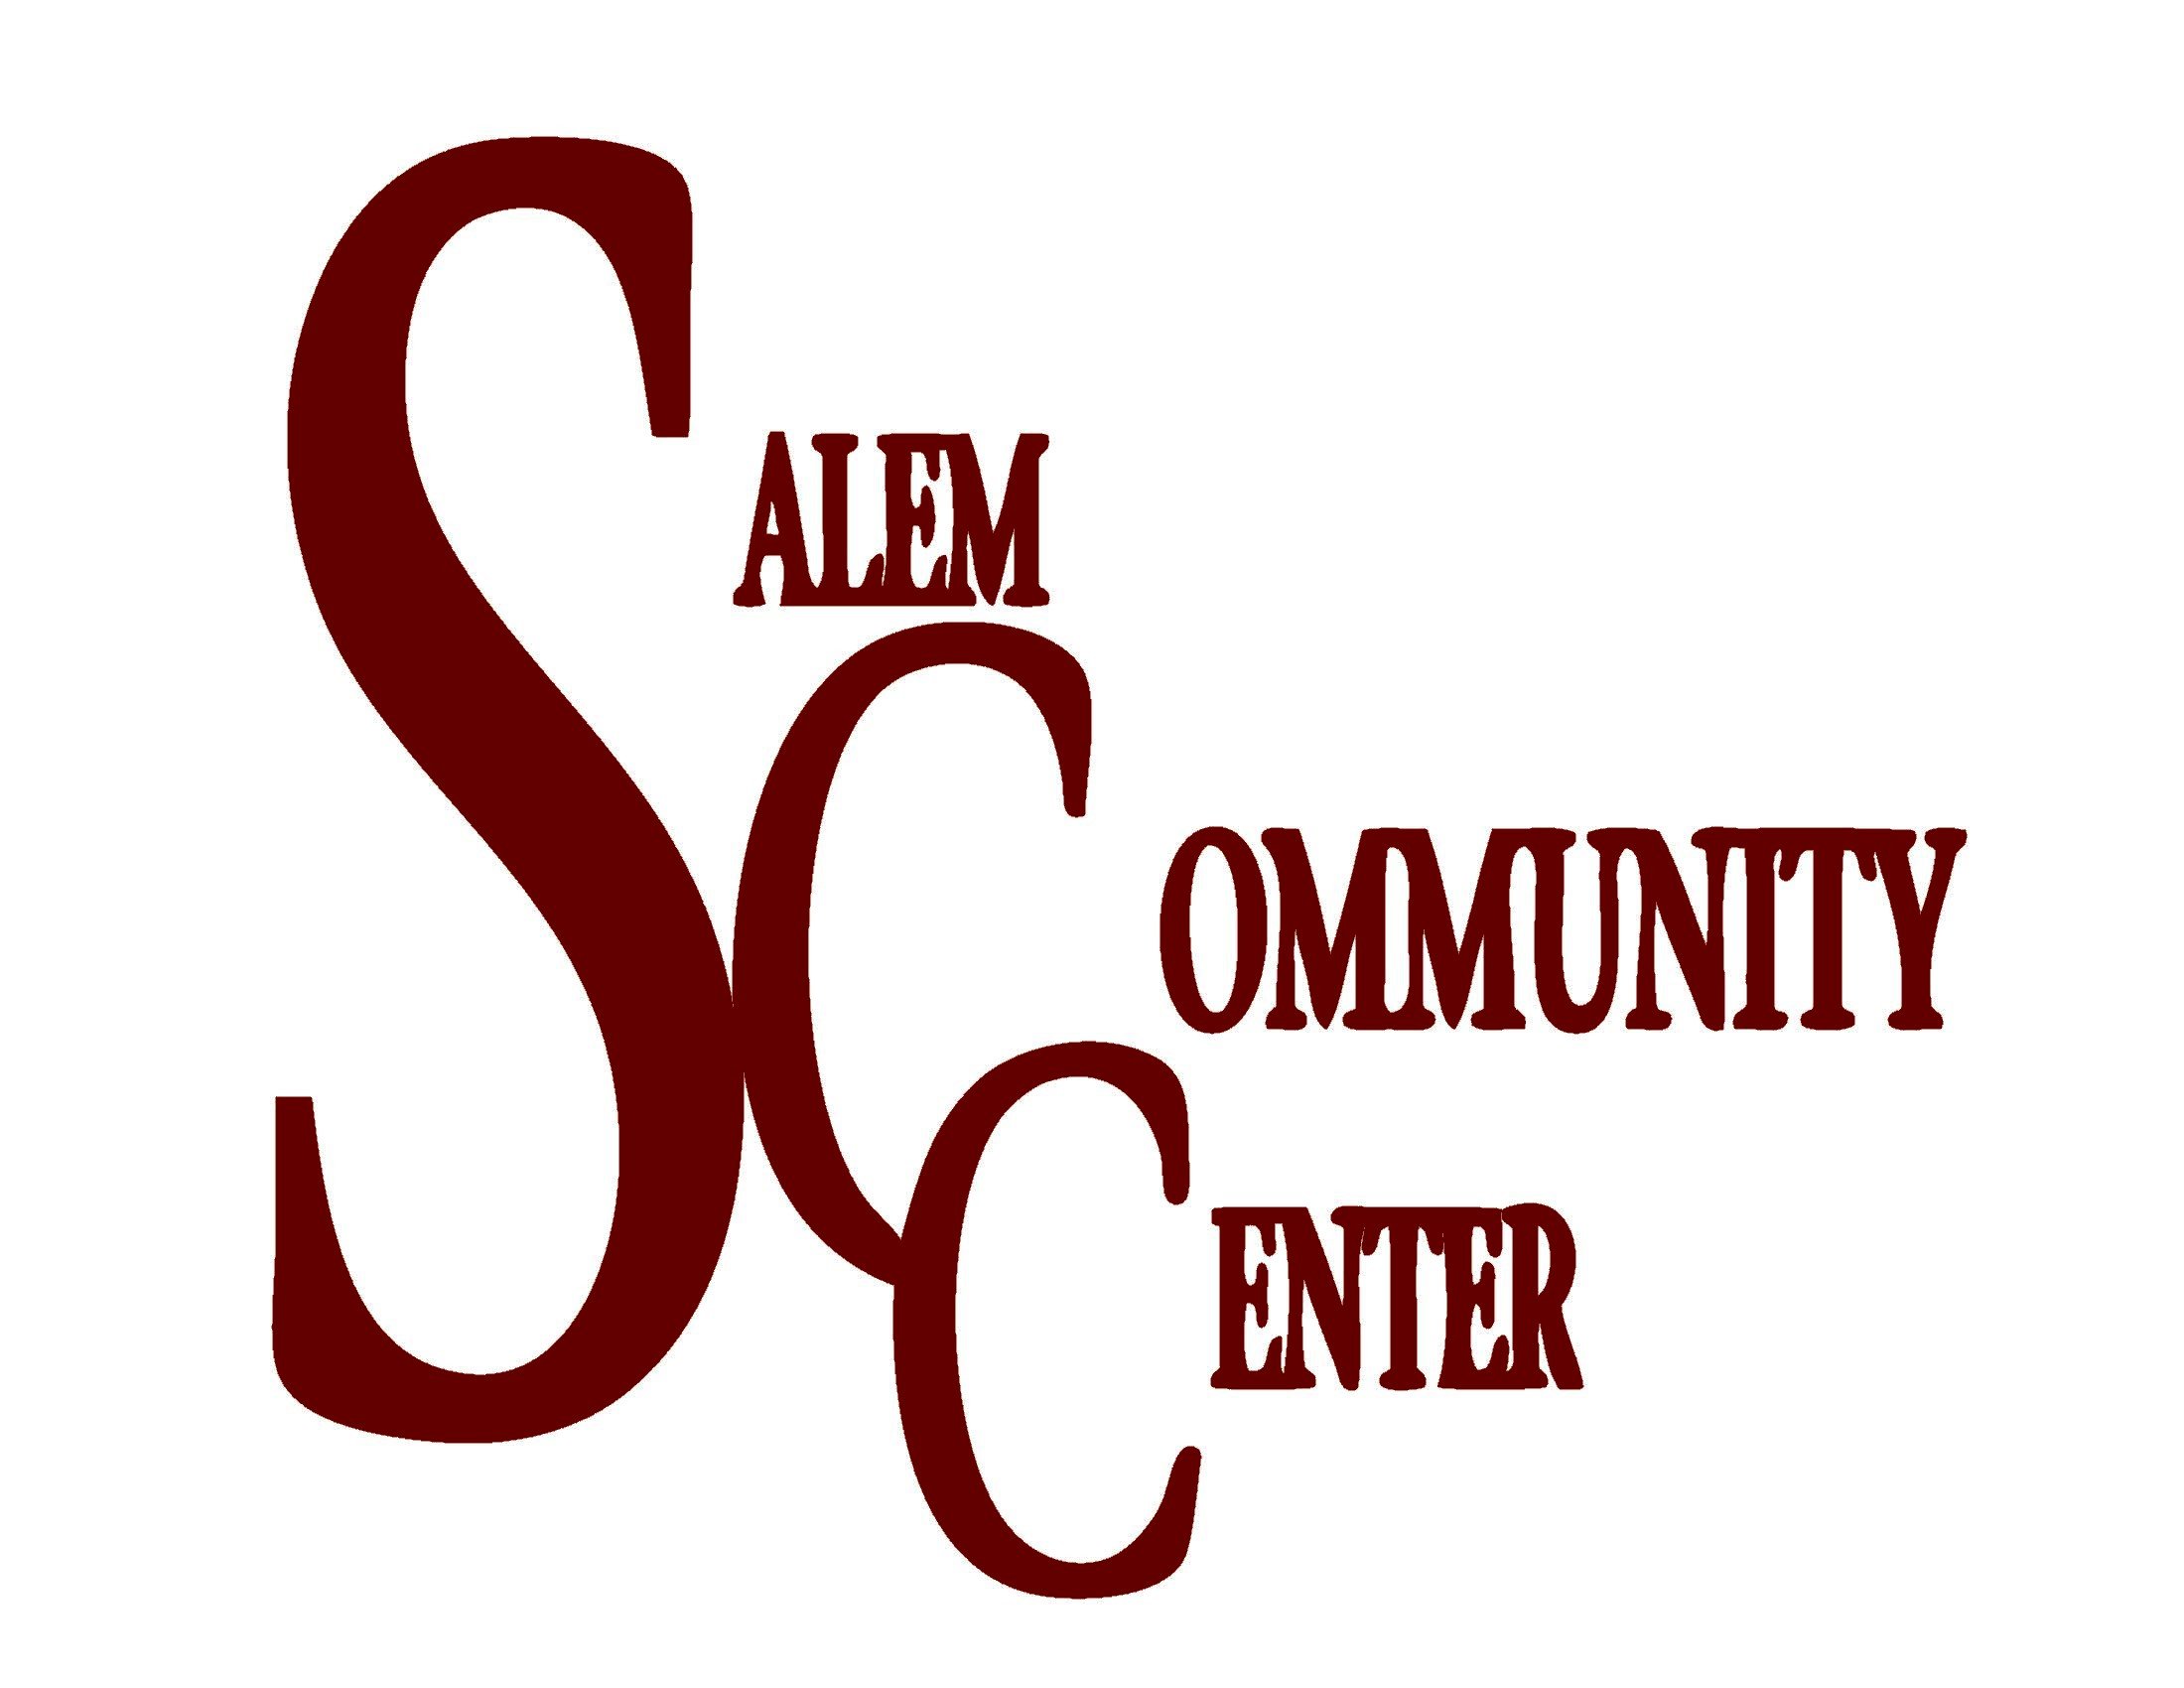 Salem Community Center logo